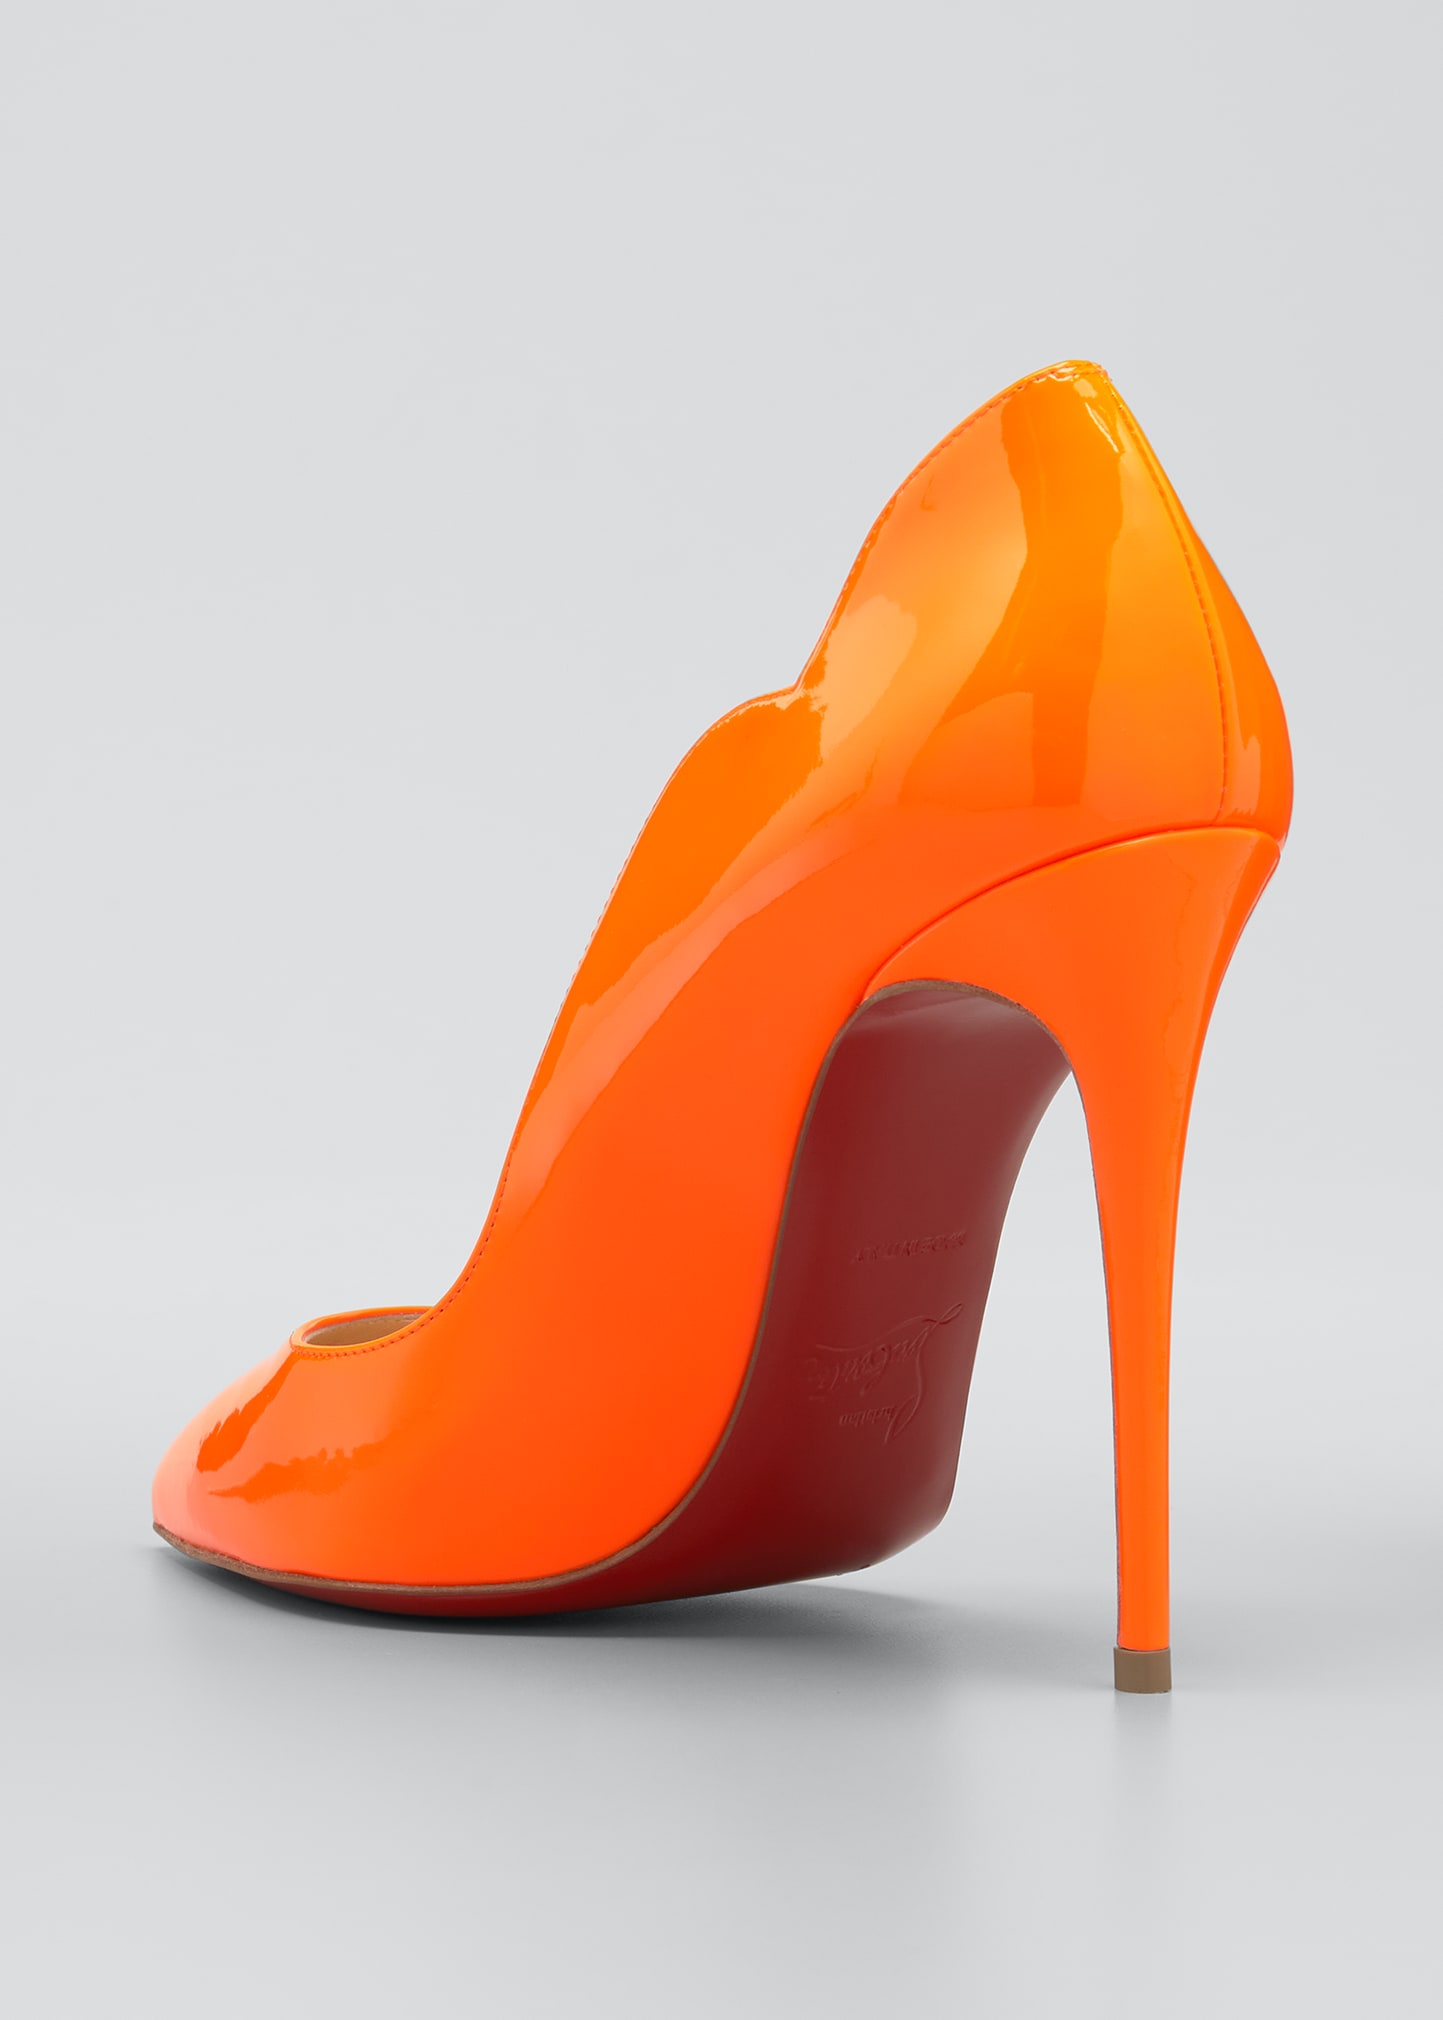 cheapest louboutin heels